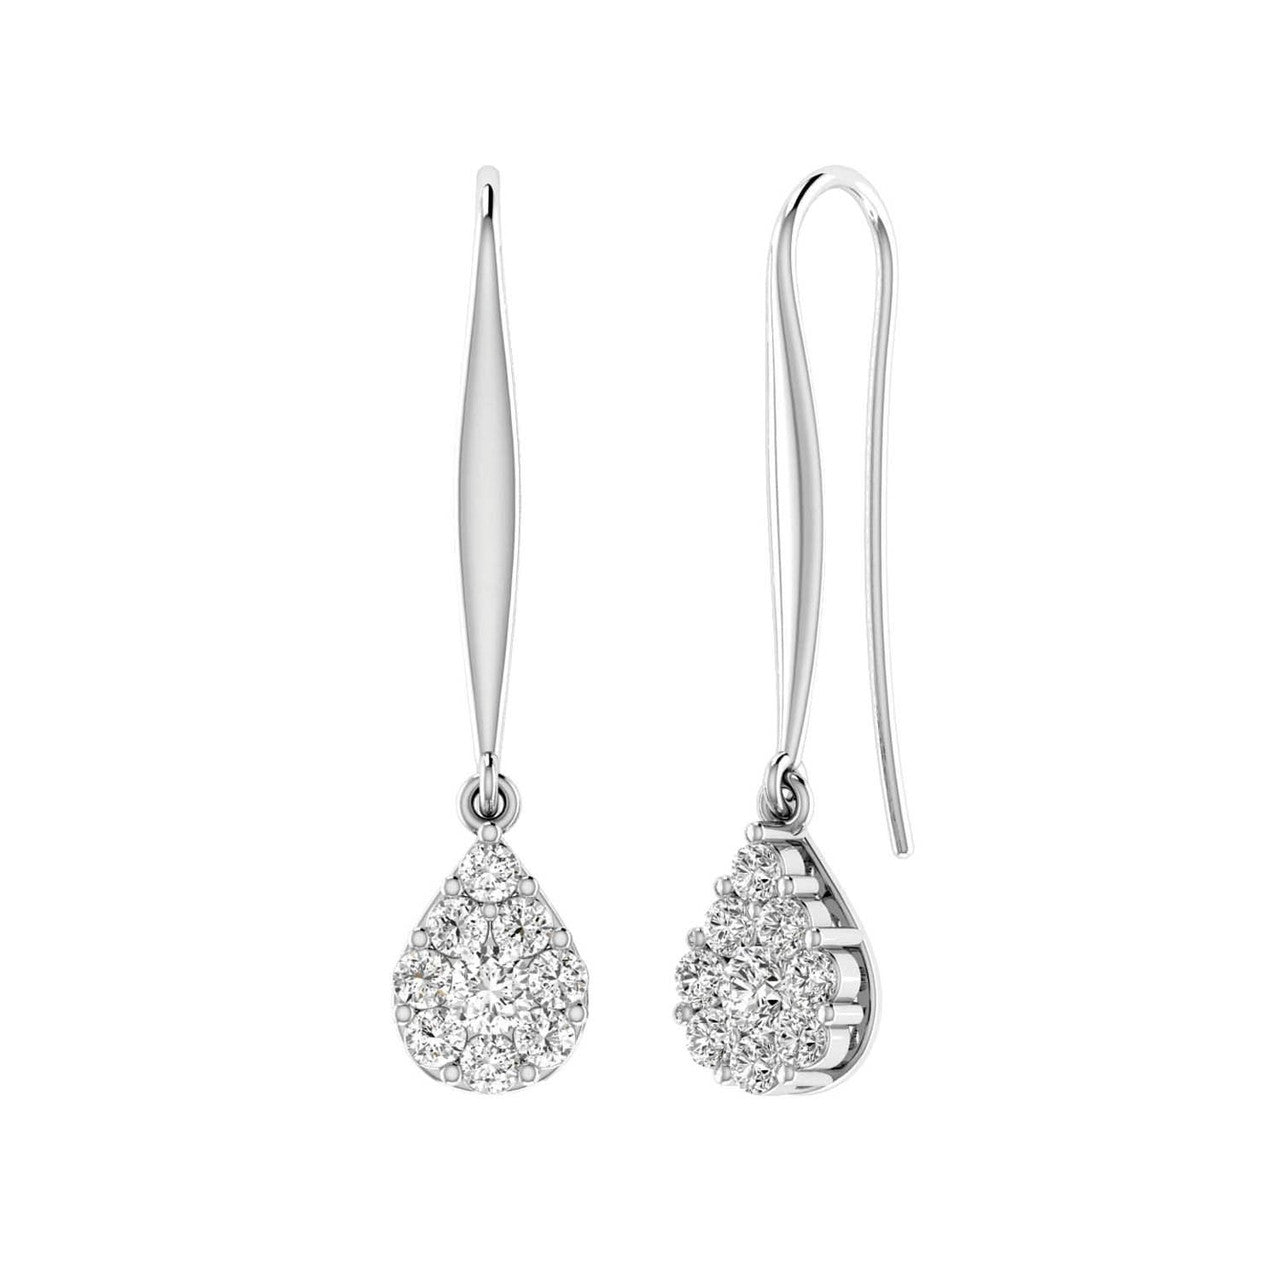 Ice Jewellery Tear Drop Hook Diamond Earrings with 1.00ct Diamonds in 9K White Gold - 9WTDSH100GH | Ice Jewellery Australia